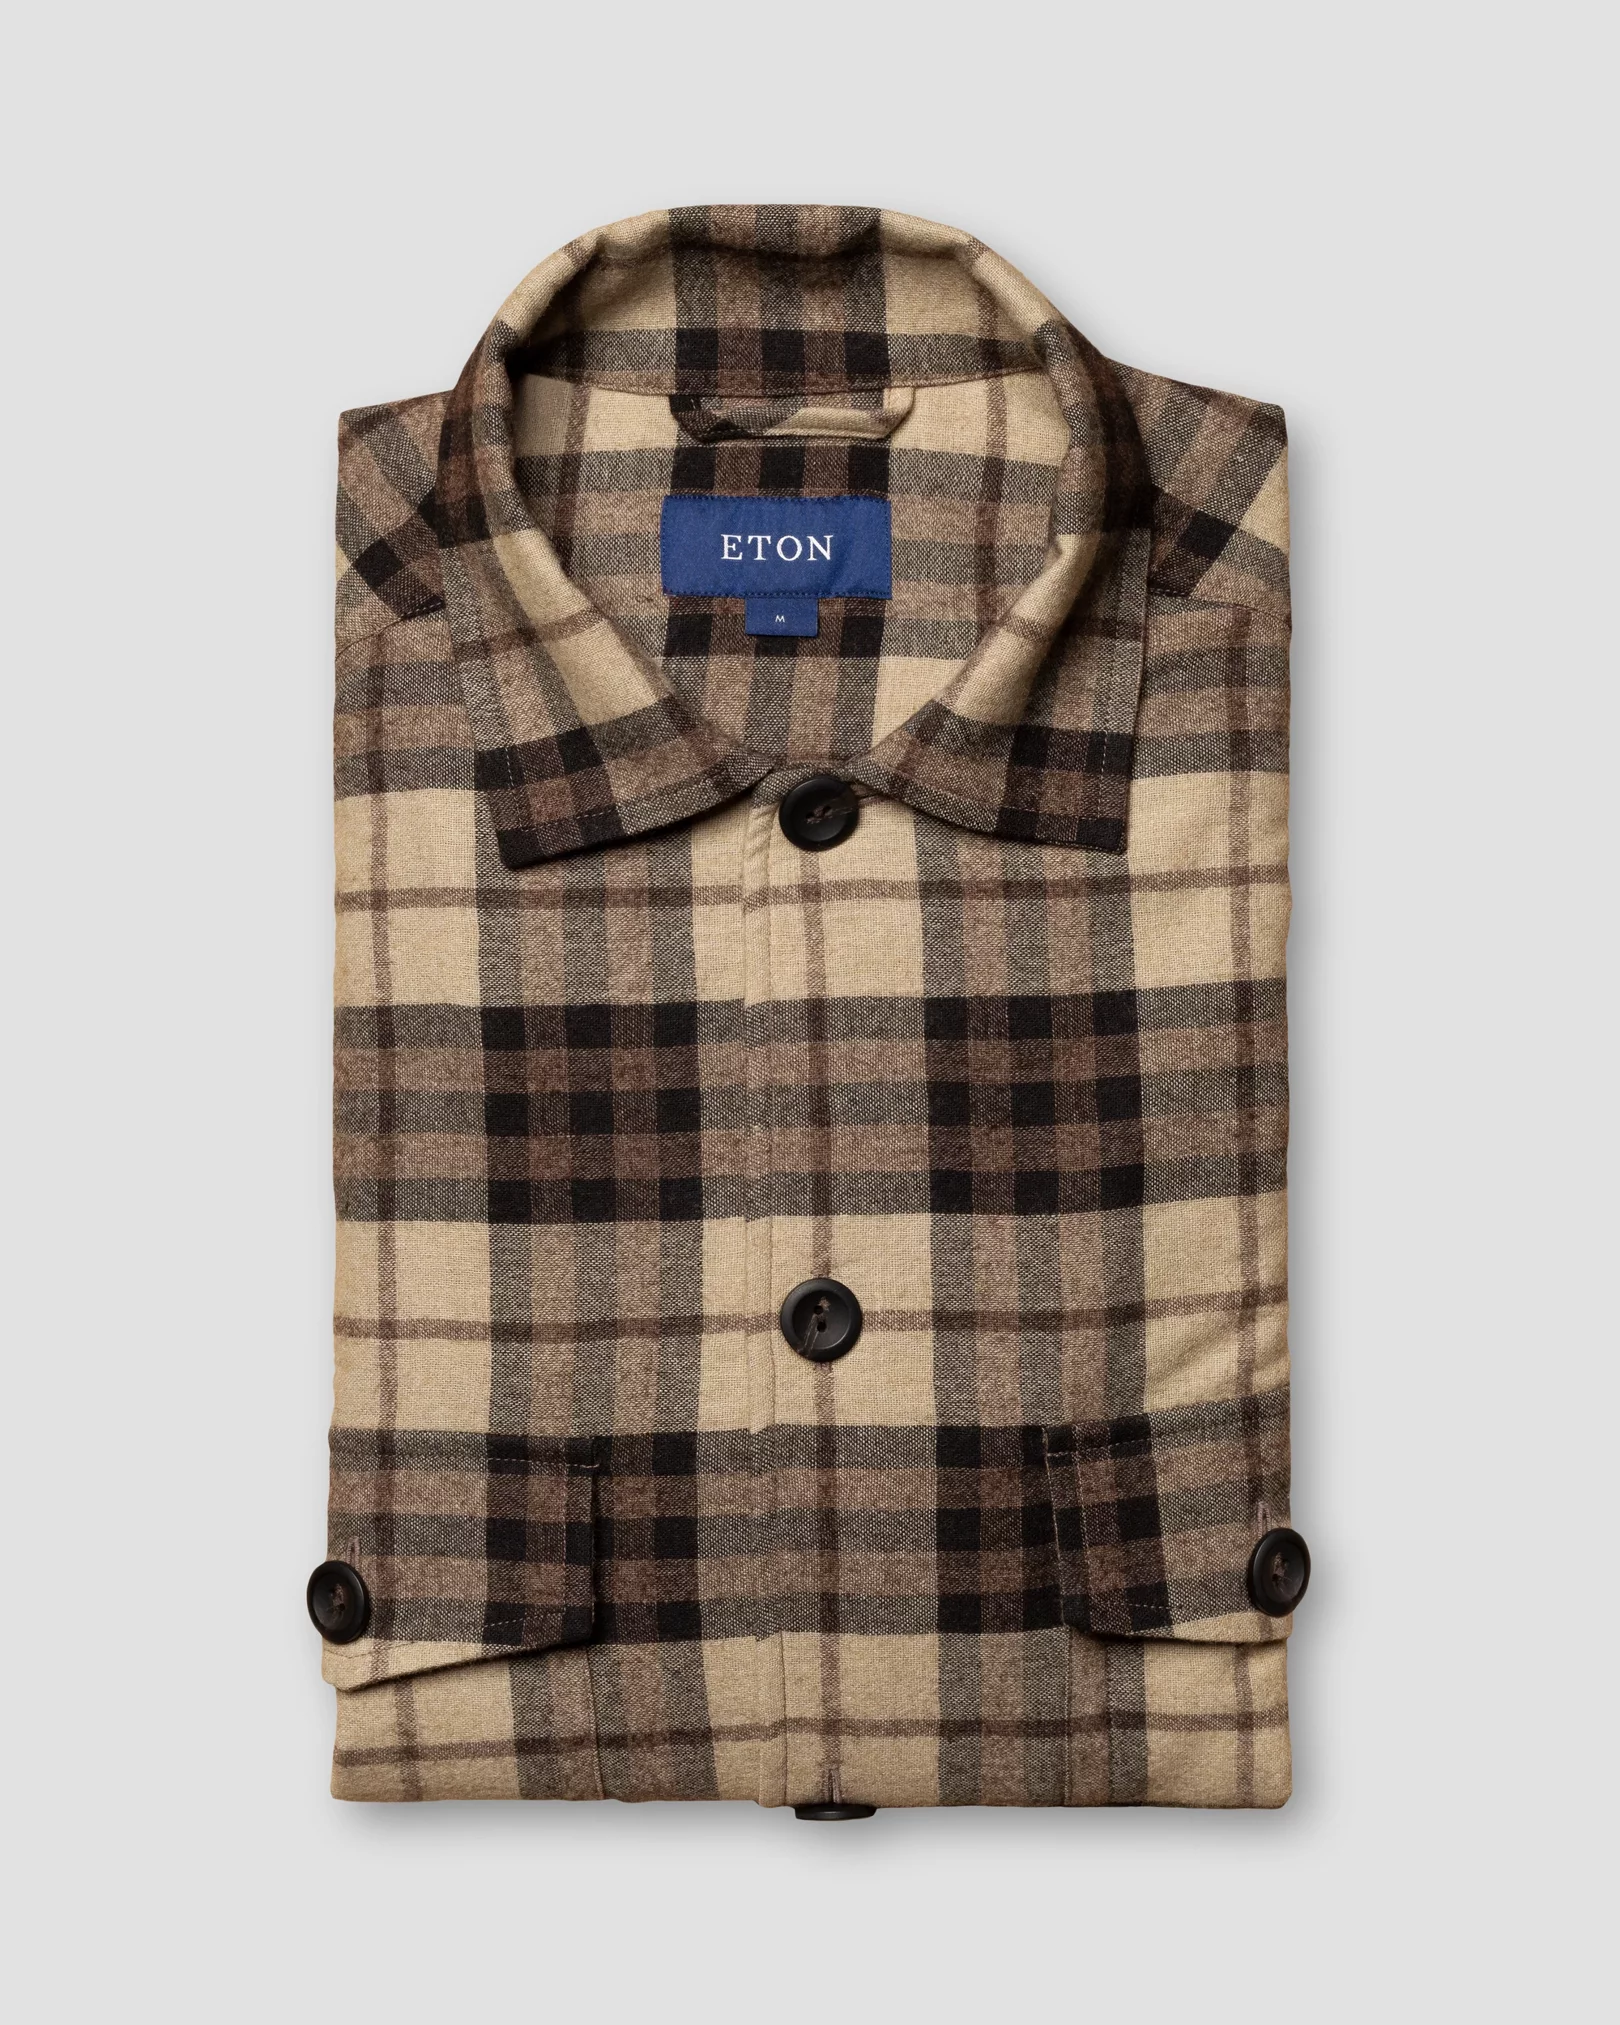 Eton - brown checked cotton wool cashmere overshirt turn down single cuff pointed strap regular